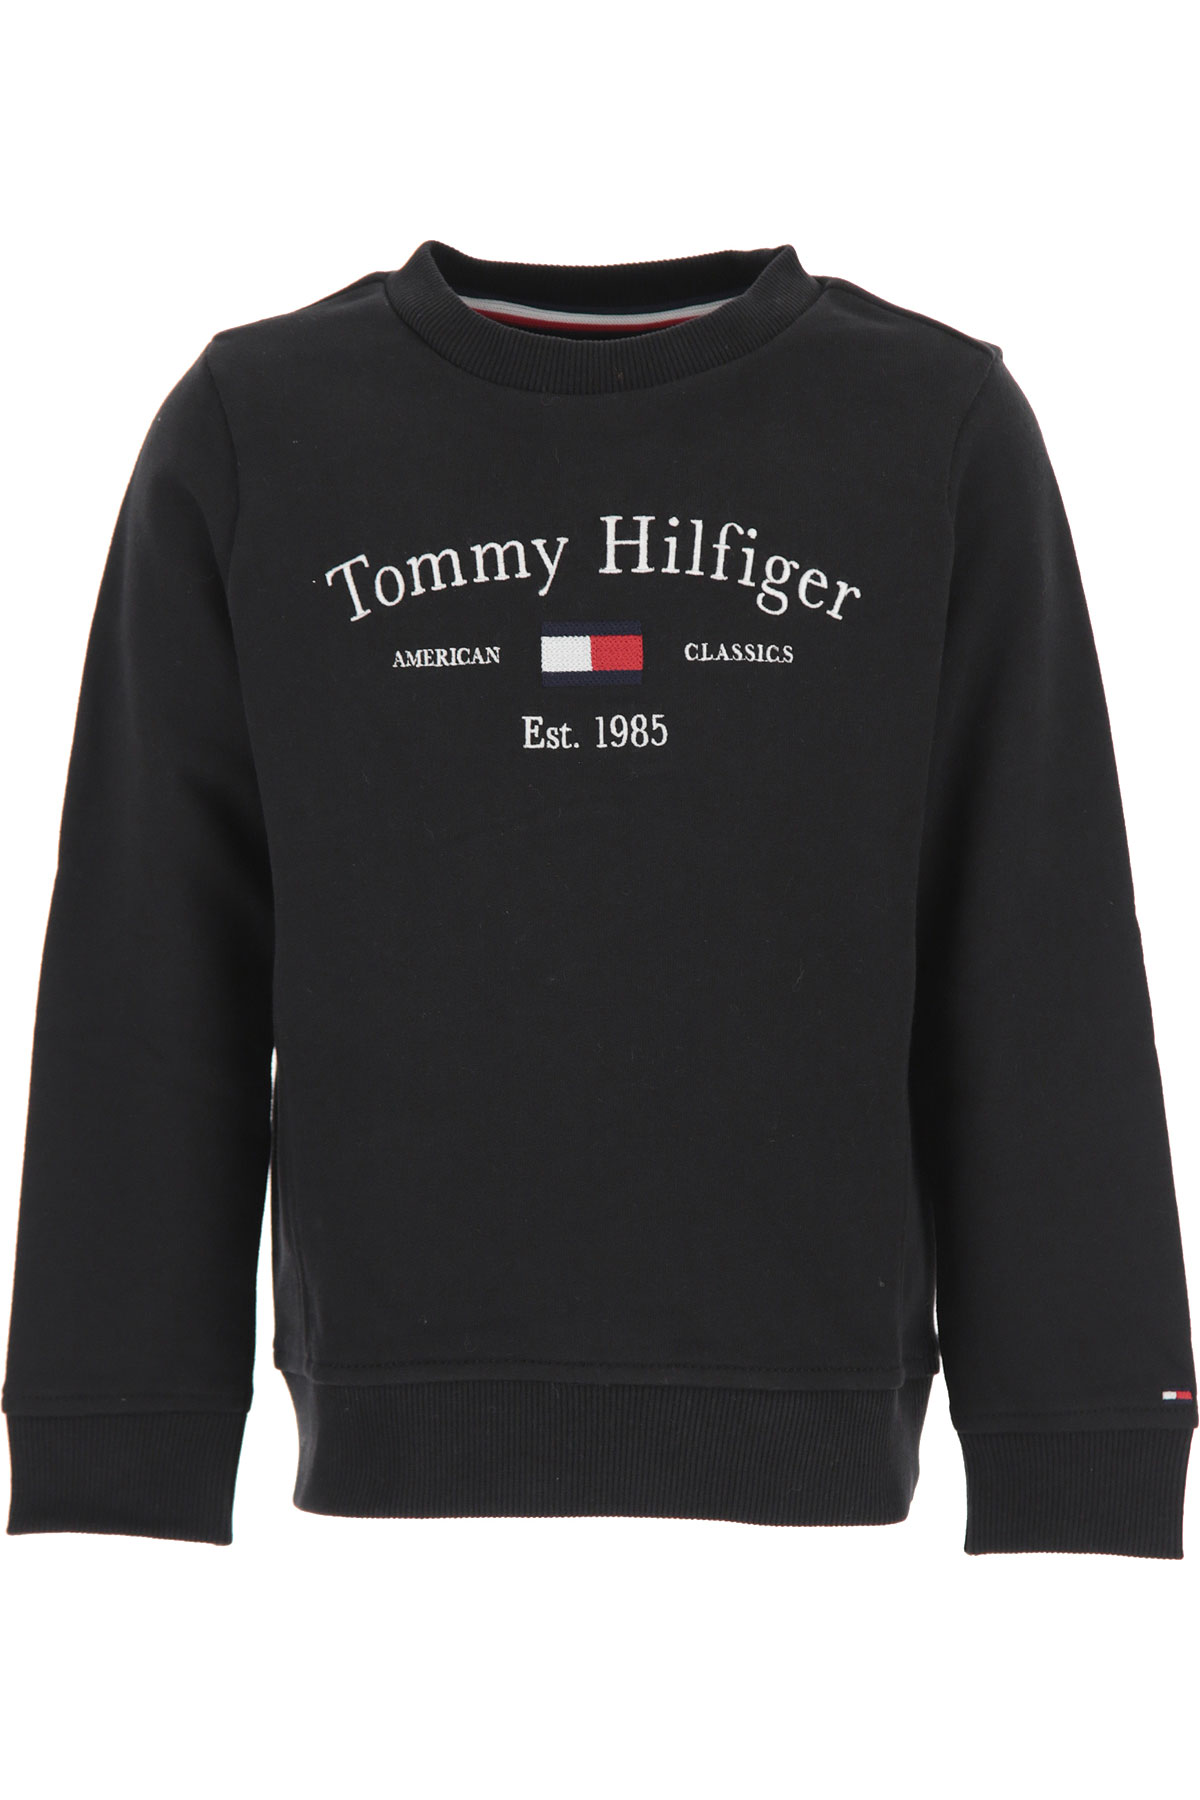 Kidswear Tommy Hilfiger, Style code: kb0kb06347-bds-